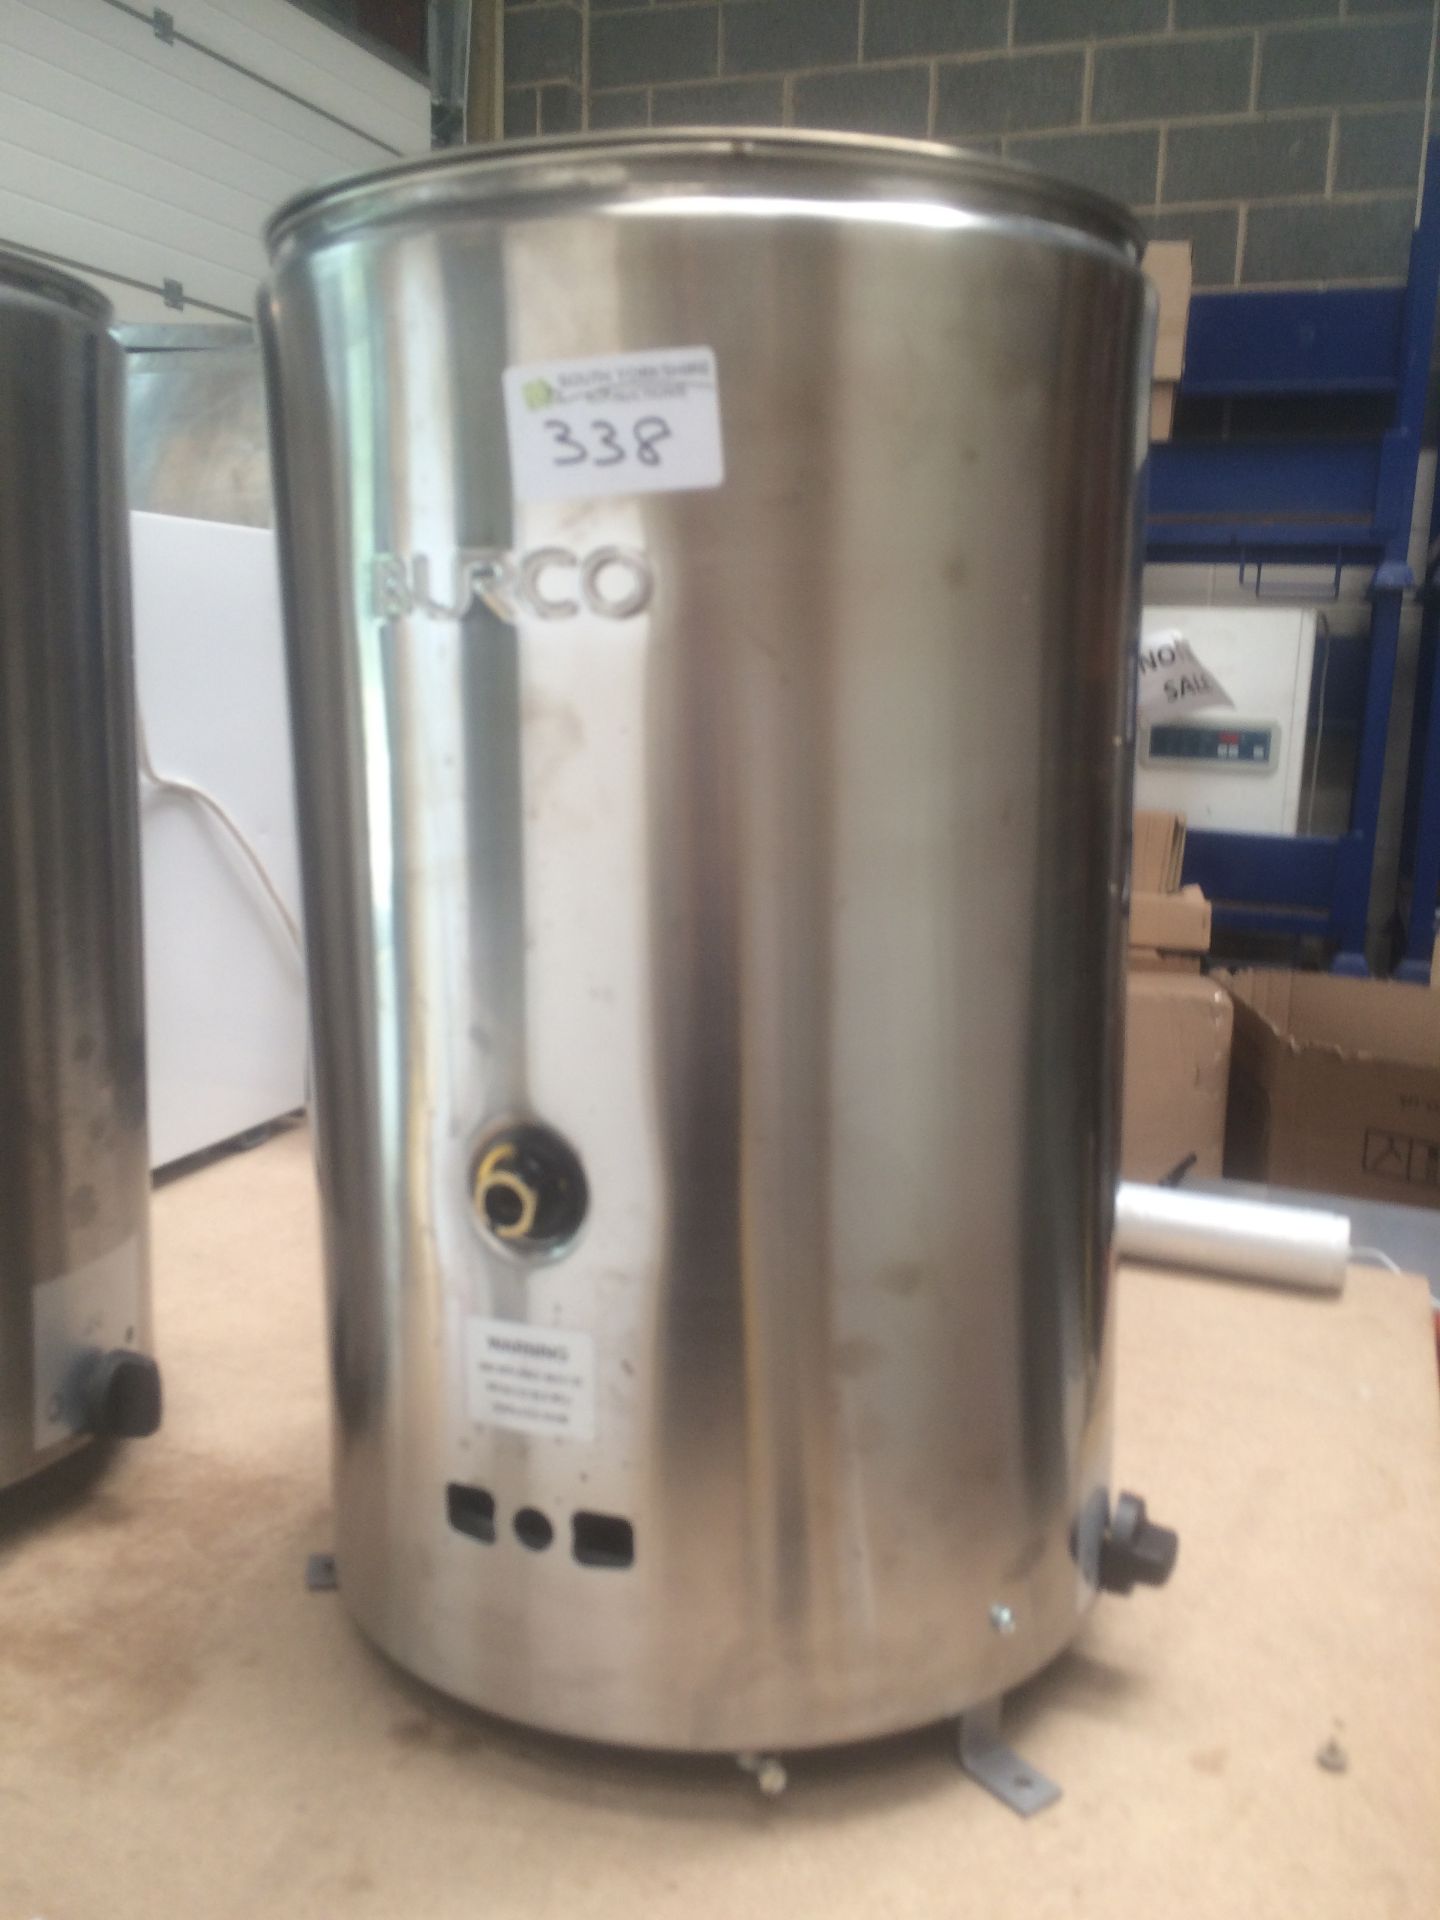 Burco LPG Water Boiler